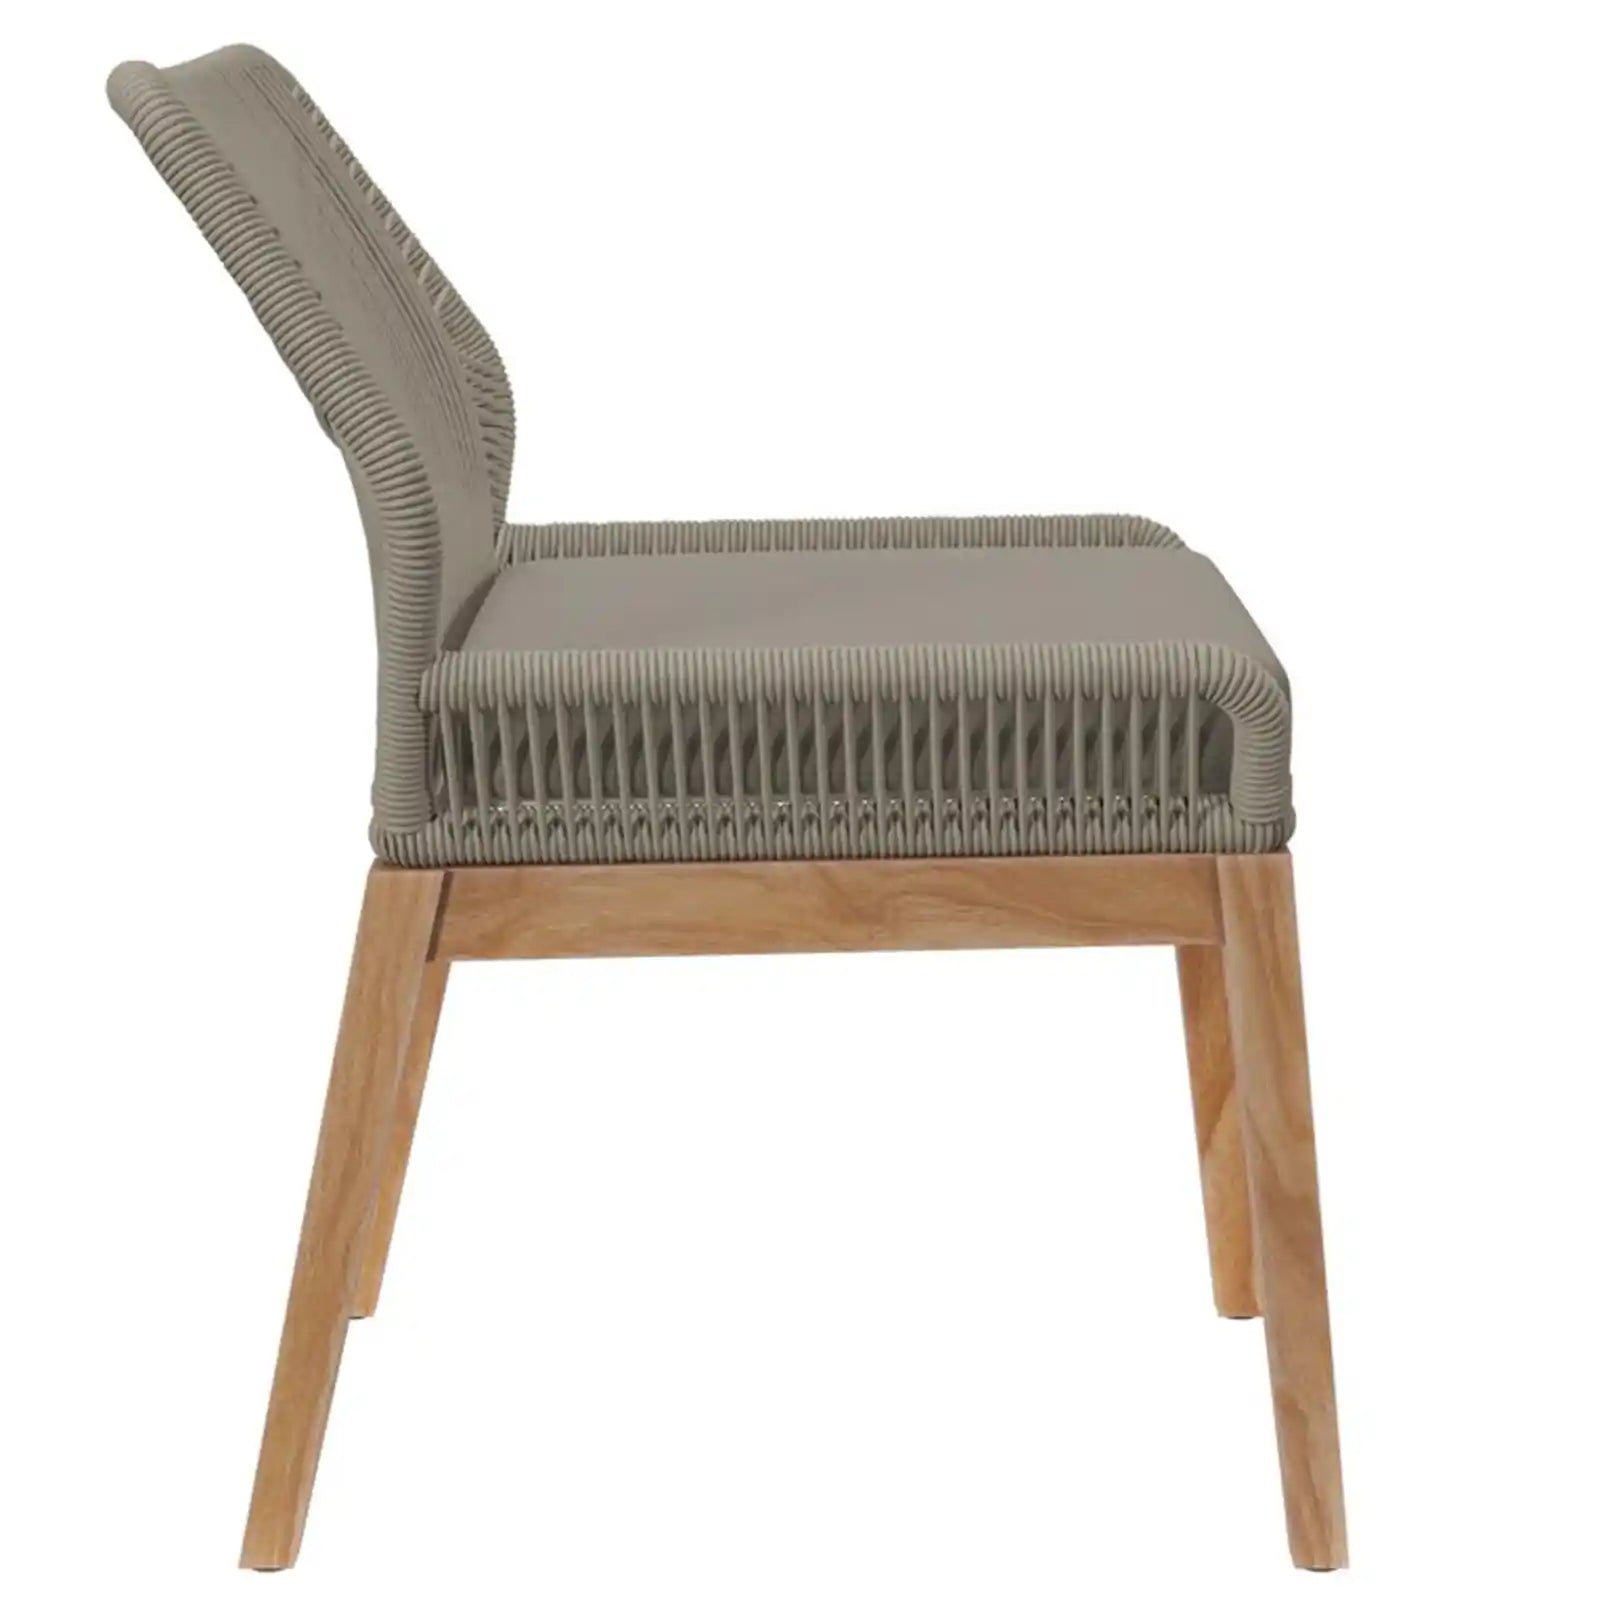 Indoor and Outdoor Patio Teak Wood Dining Chair